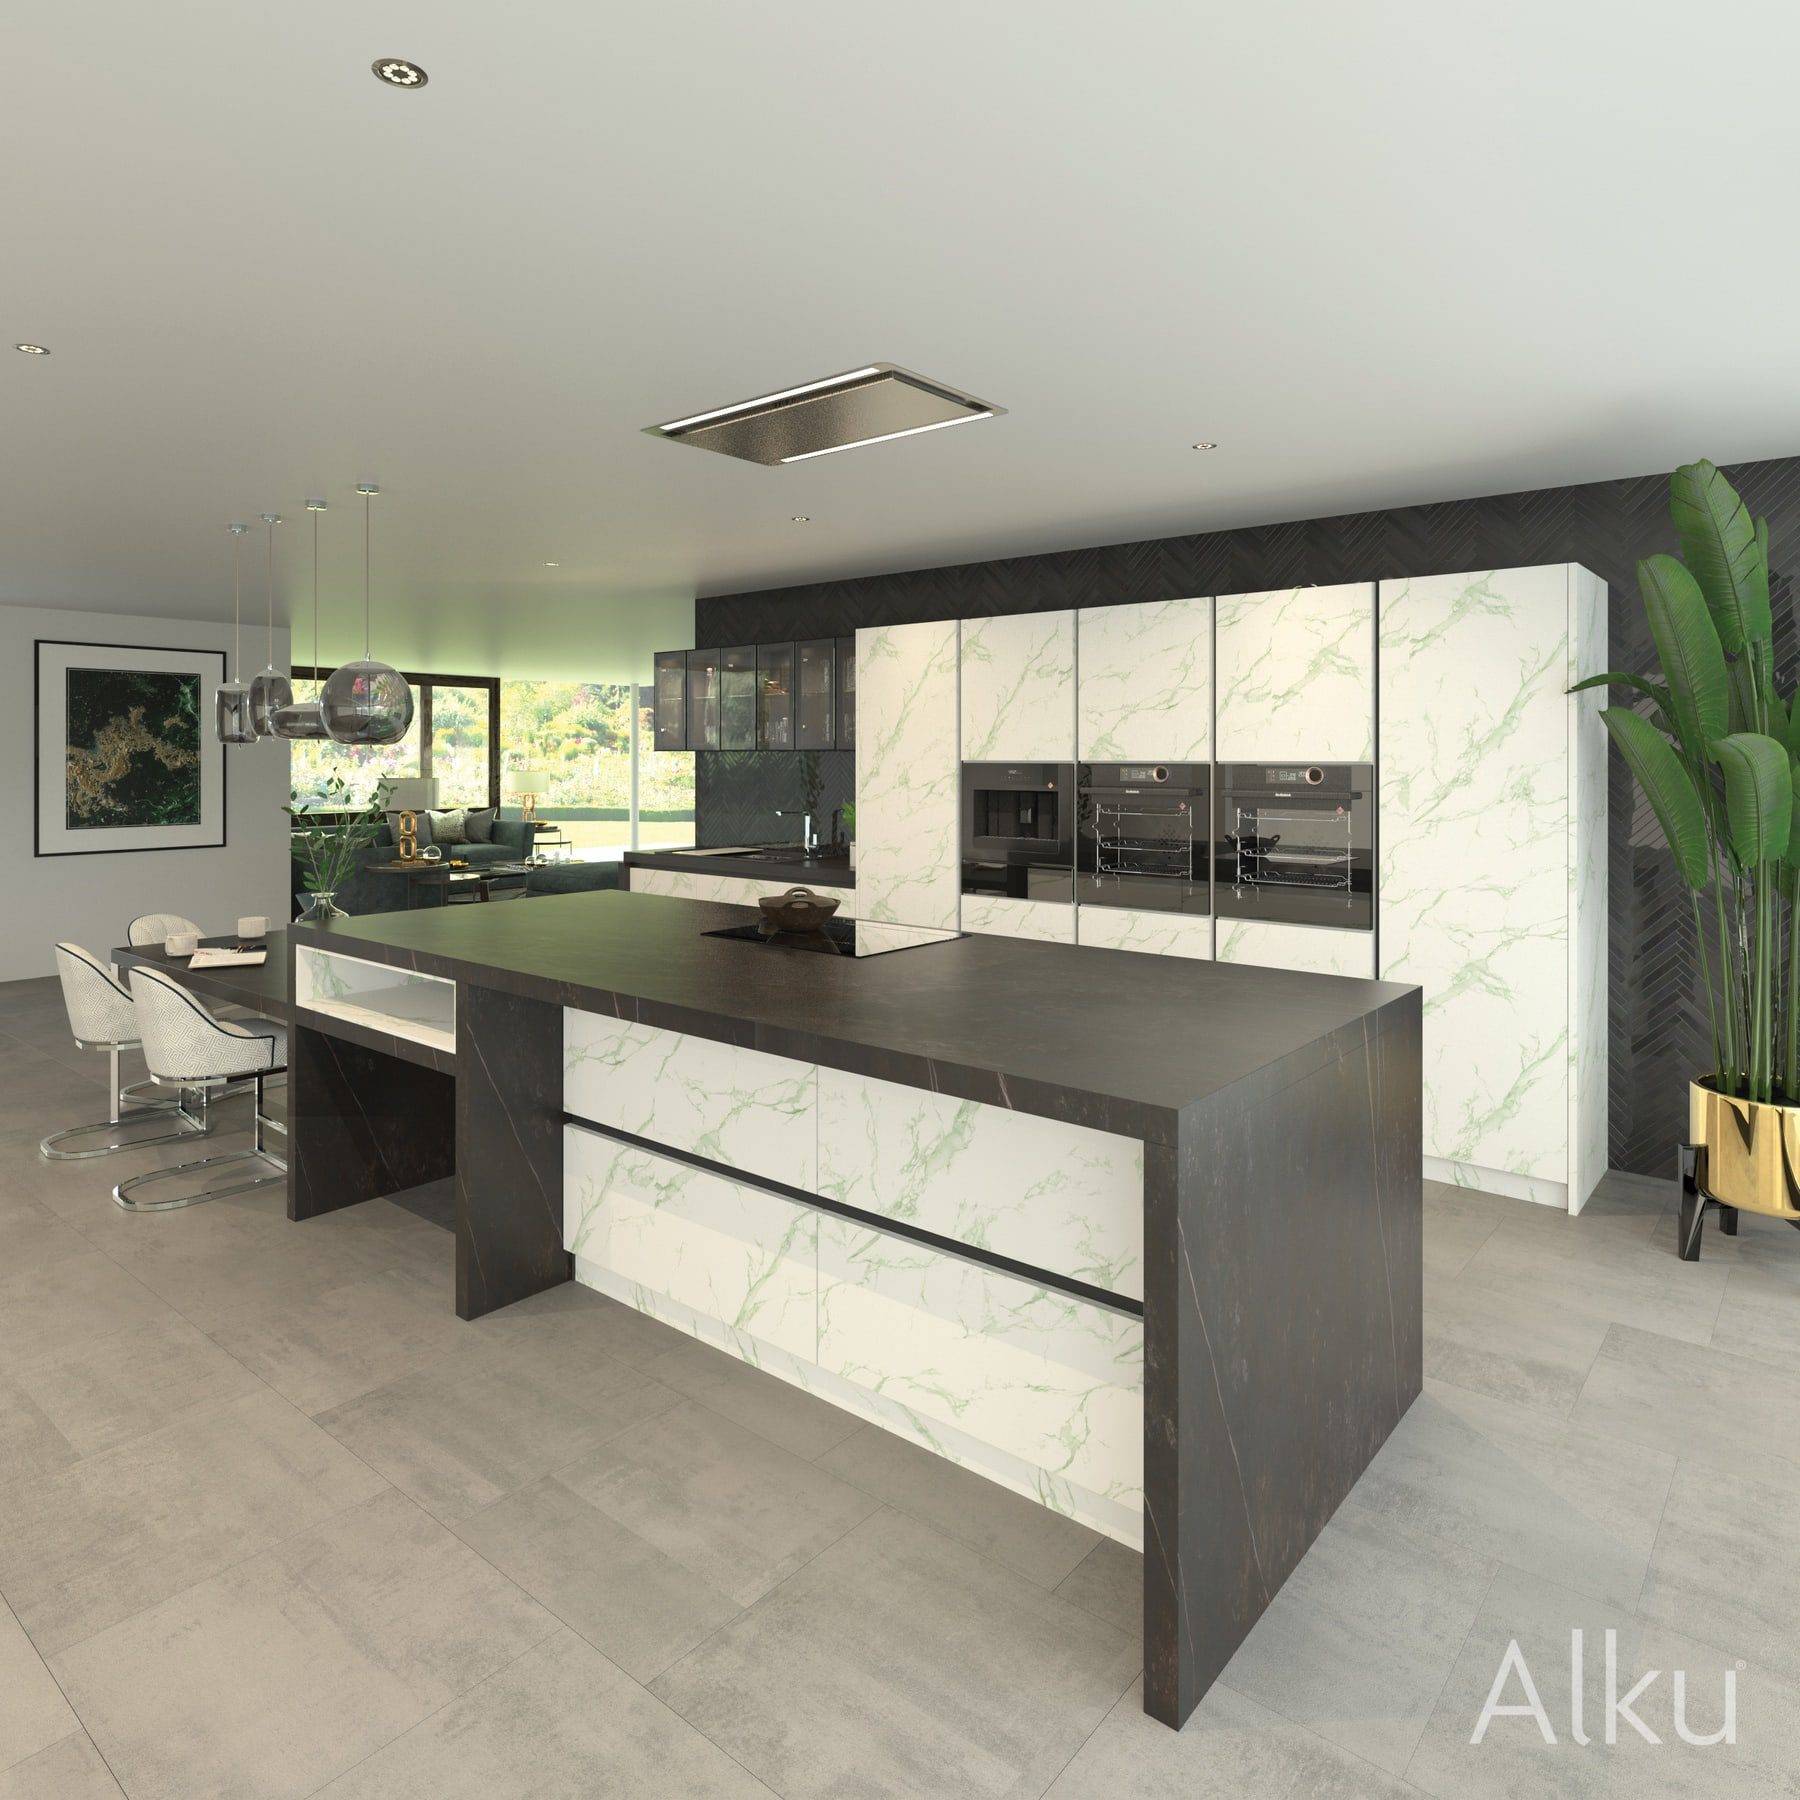 Alku Light Ceramic Kitchen | Rowe Fitted Interiors, Hoylake